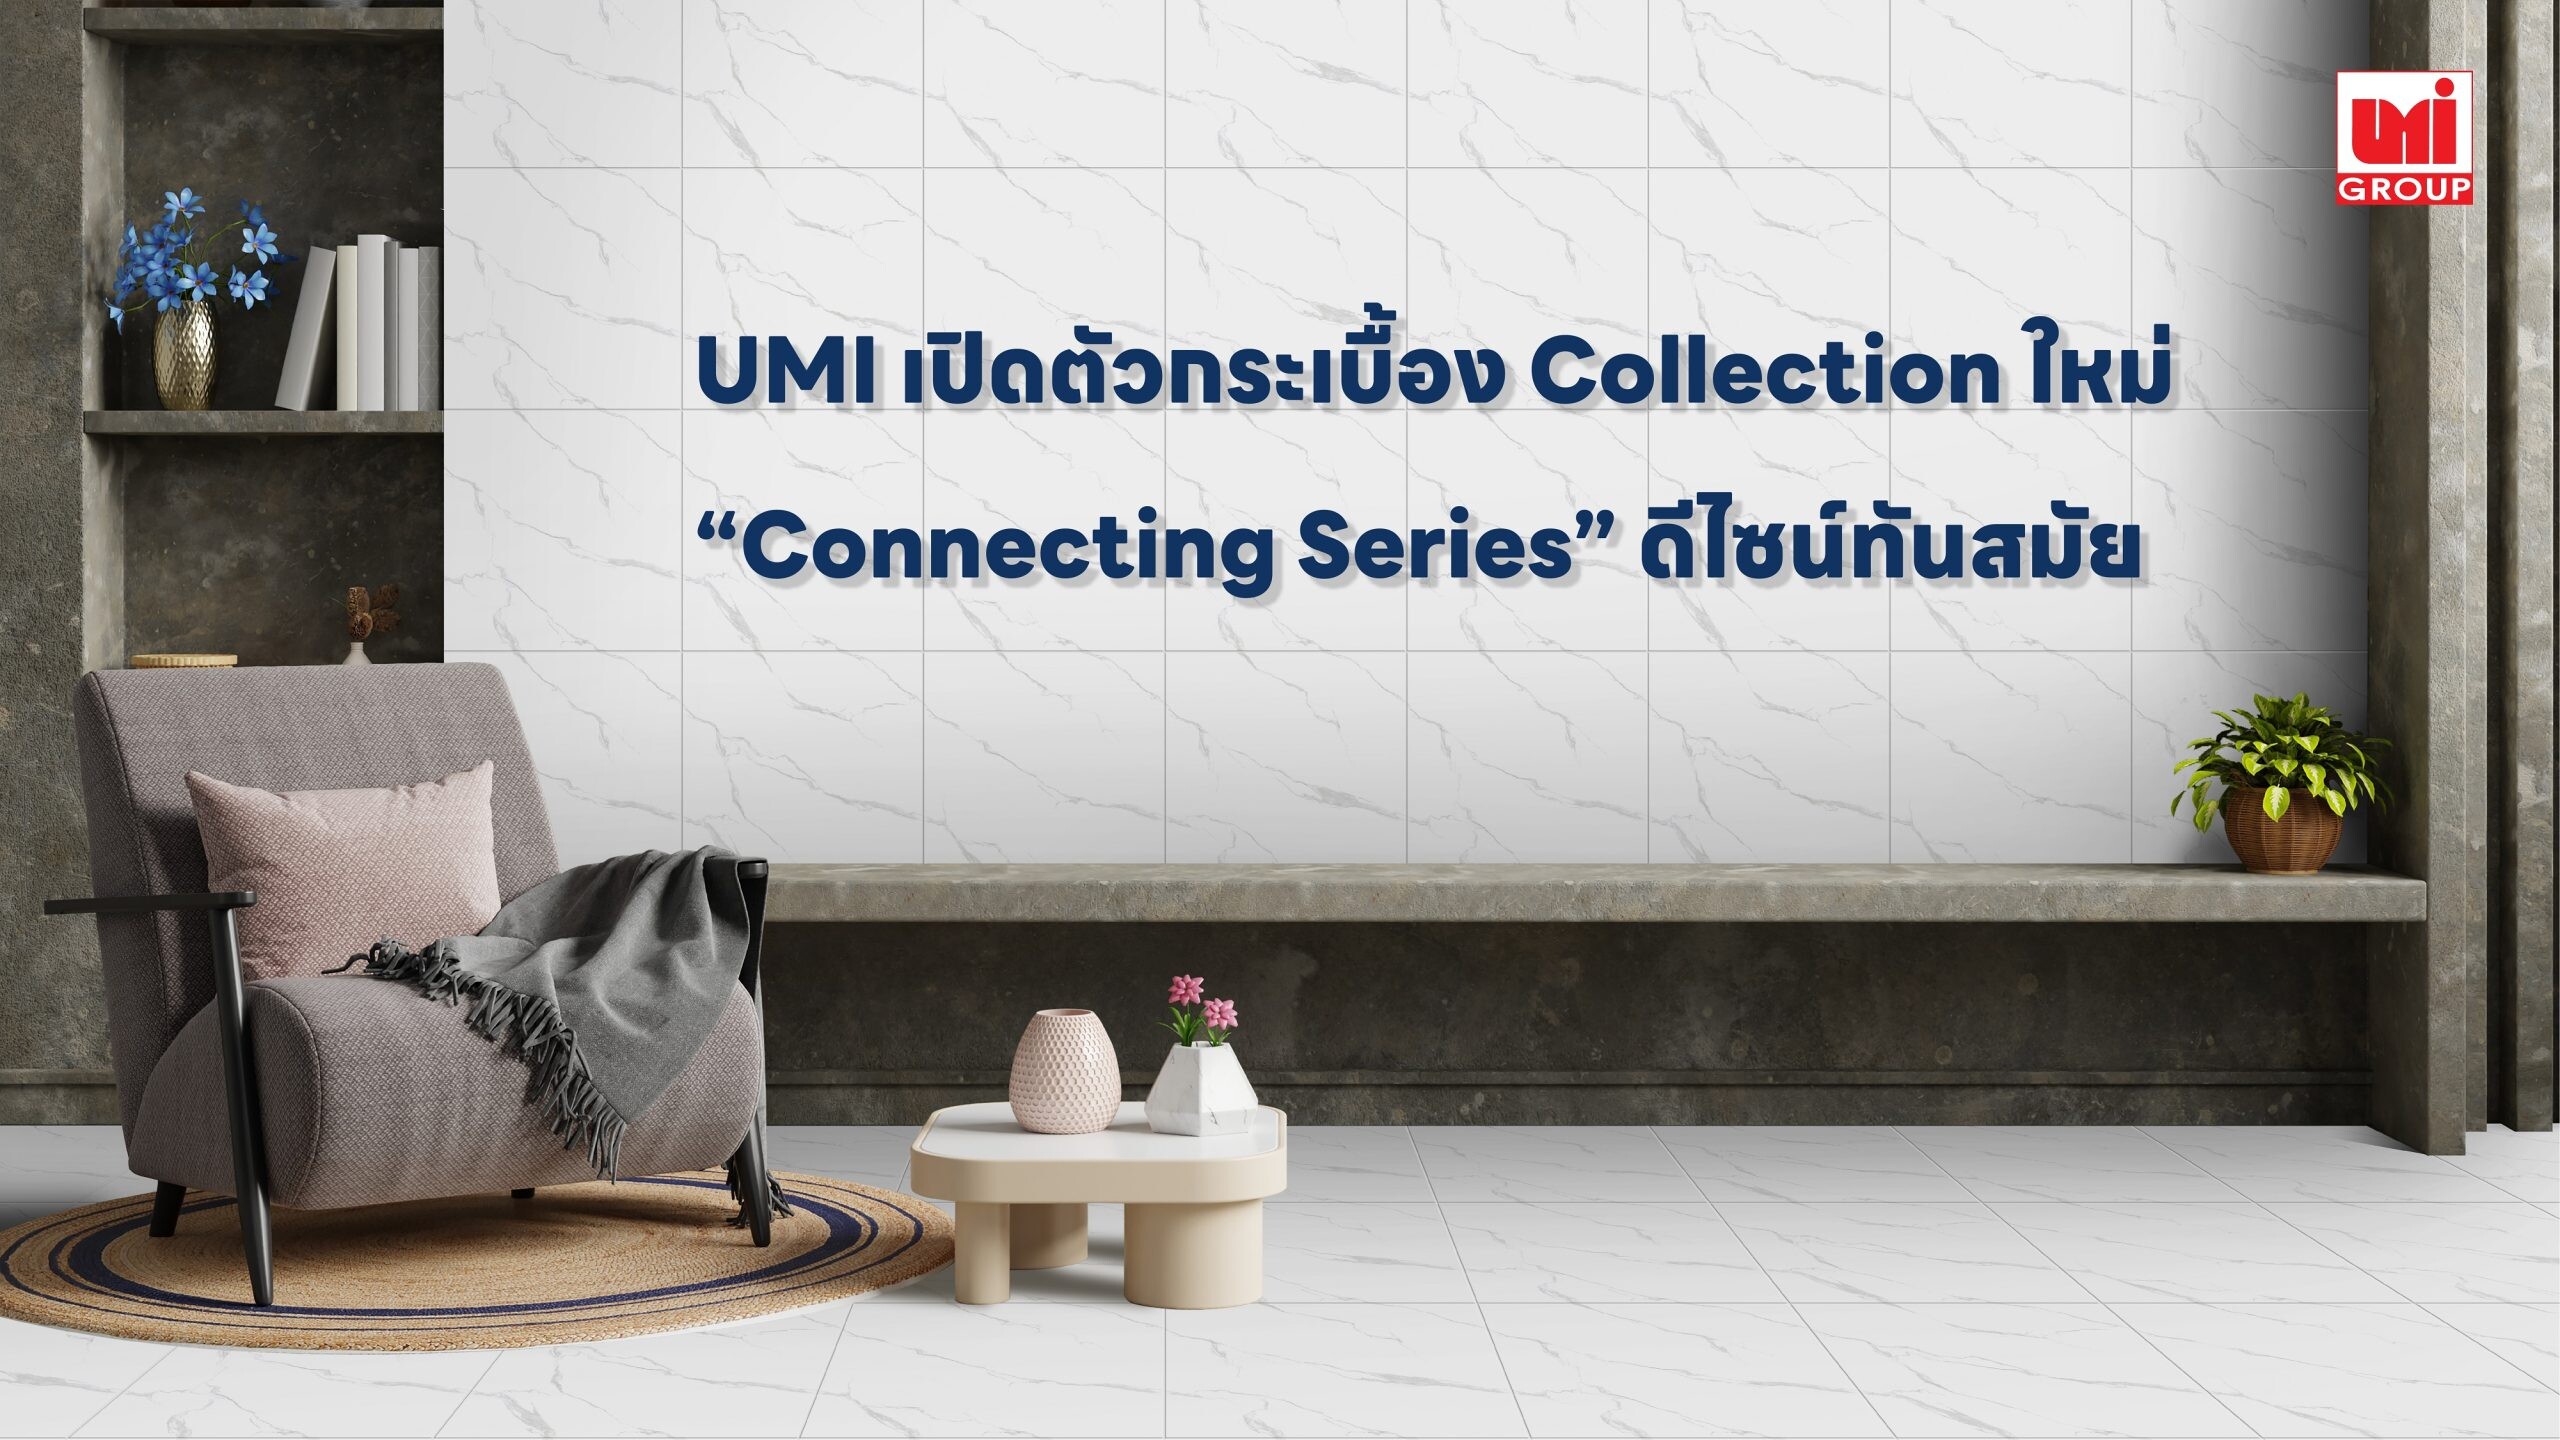 UMI เปิดตัวกระเบื้อง Collection ใหม่ "Connecting Series" ดีไซน์ทันสมัย